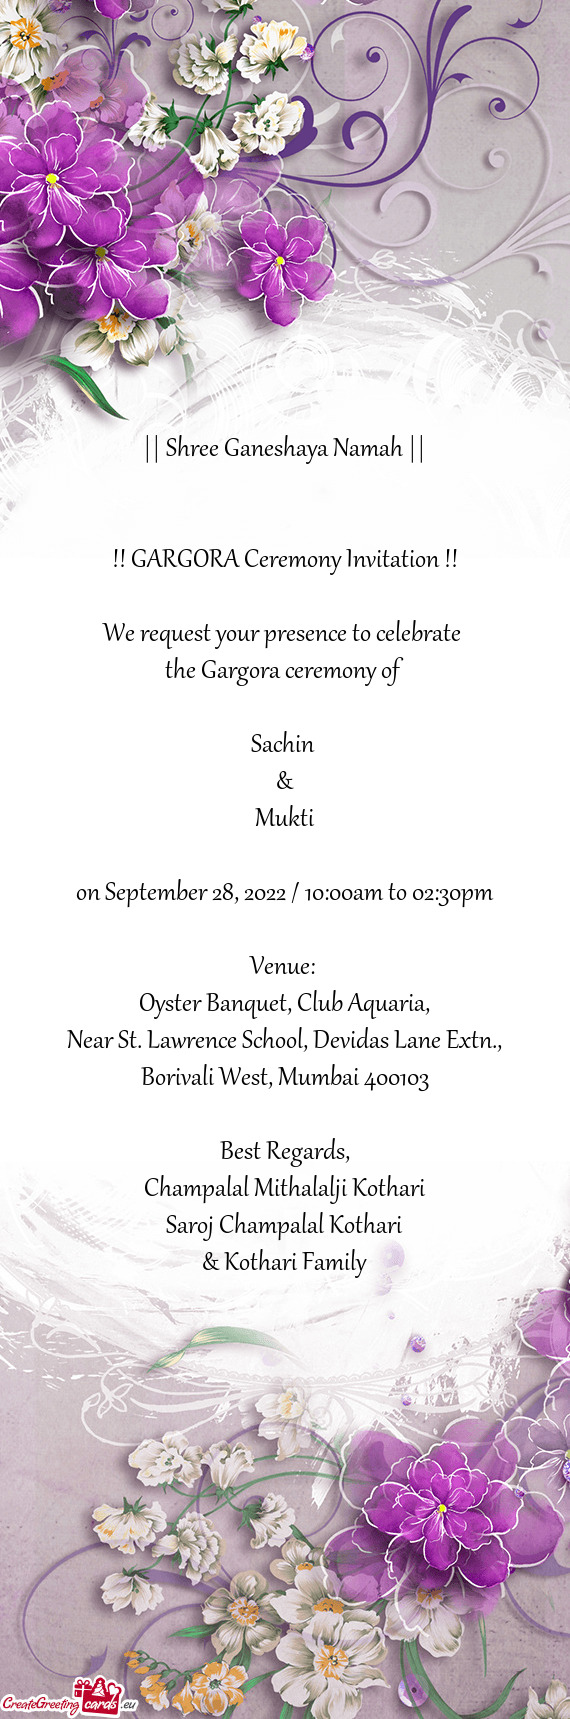 The Gargora ceremony of